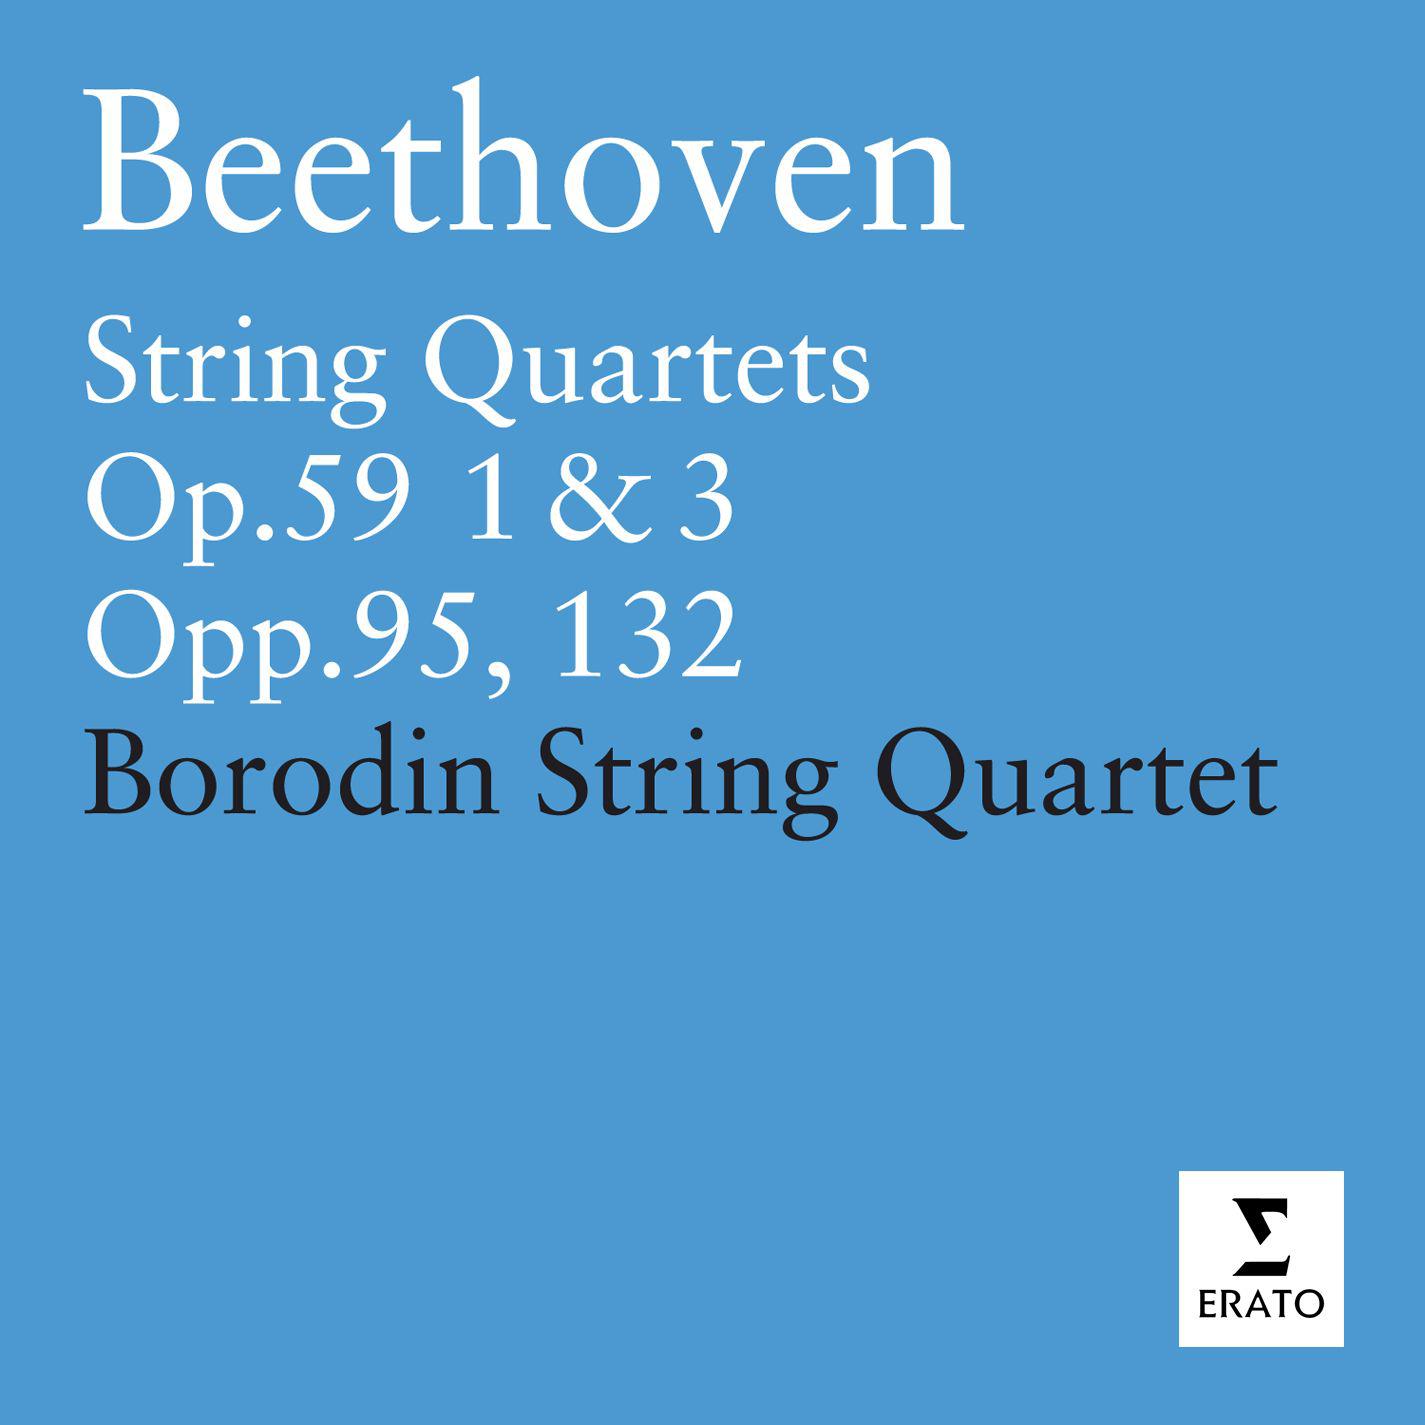 Beethoven: String Quartets Op.59 1 & 3 ' Razumovsky' - Op.95 - Op.102